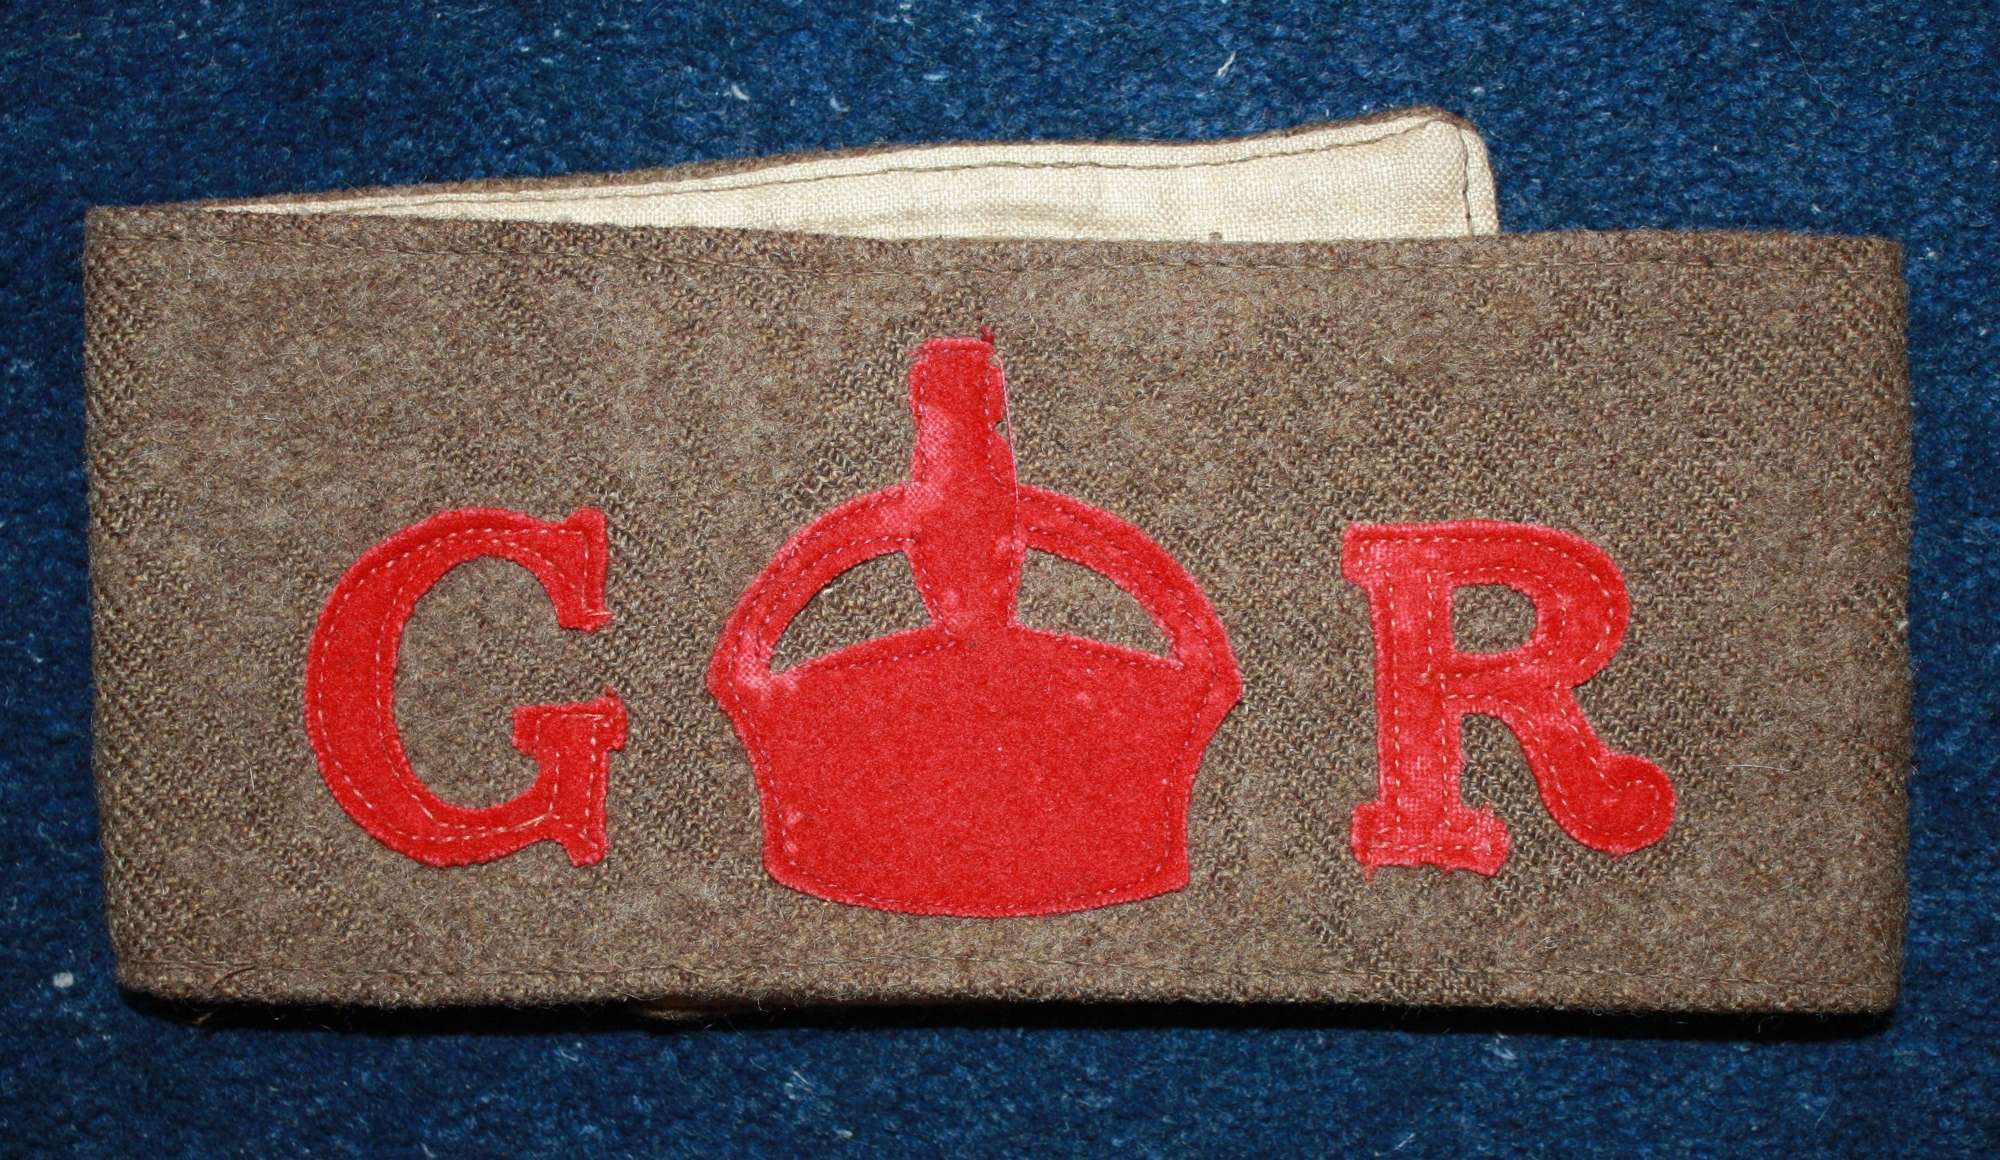 WW1 VTC (Volunteer Training Corps) GR Armband.